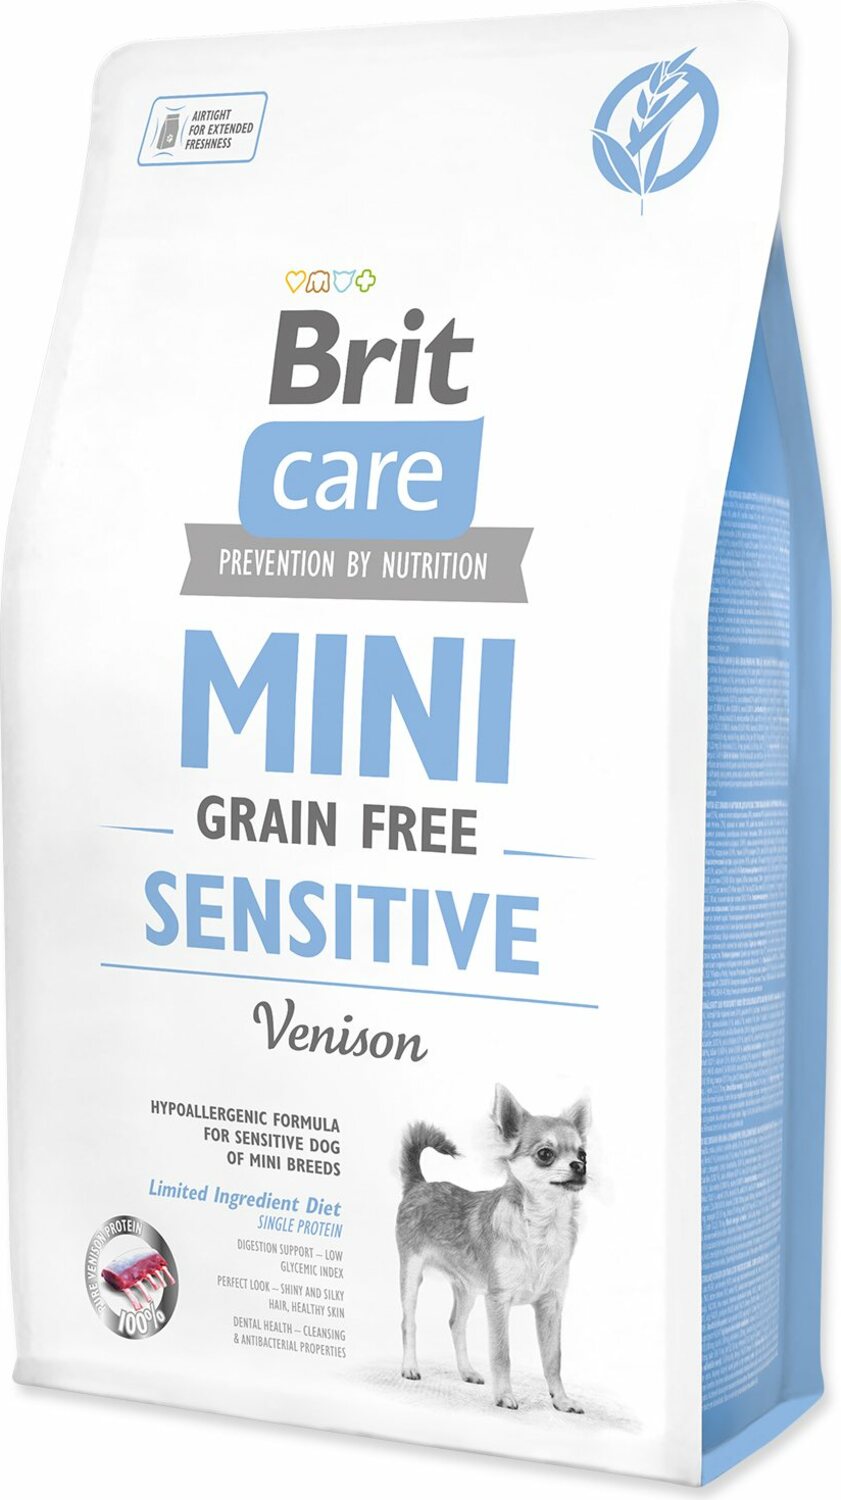 Krmivo Brit Care Mini Grain Free sensitive 2kg